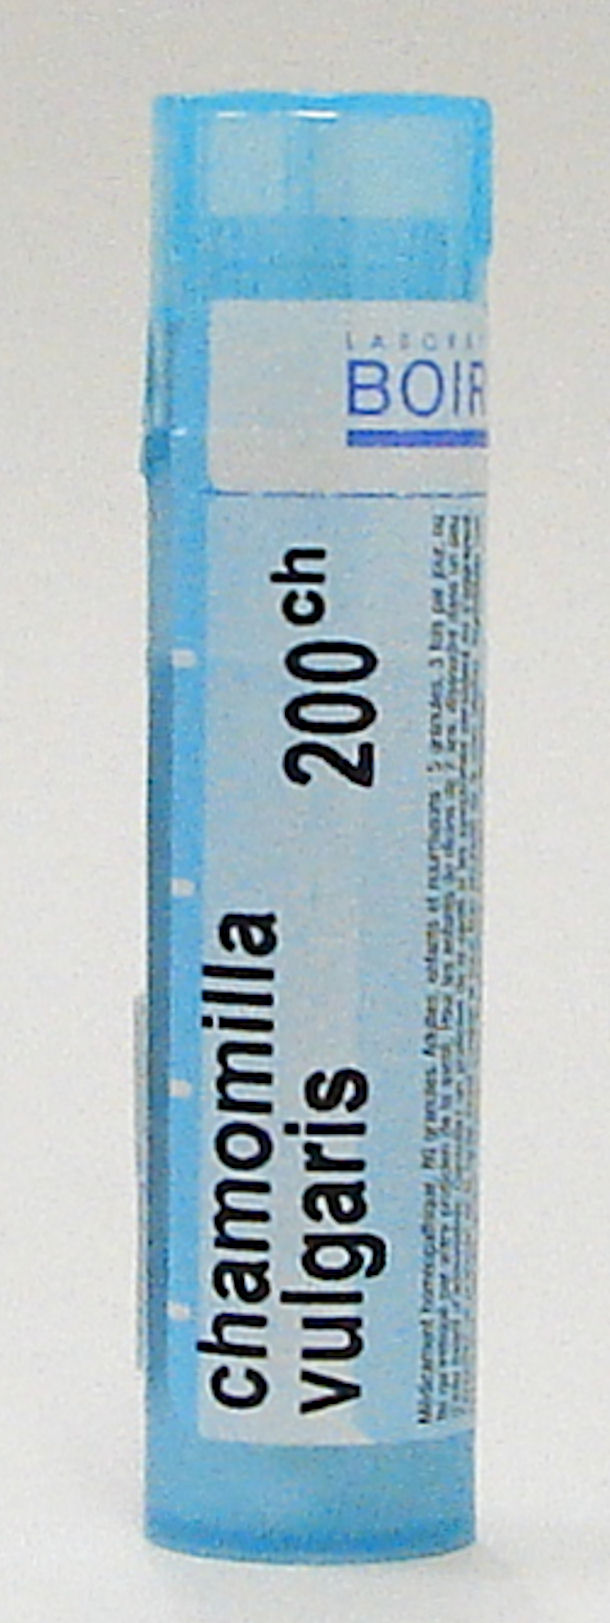 chamomilla vulgaris 200ch sublingual pellets (boiron)